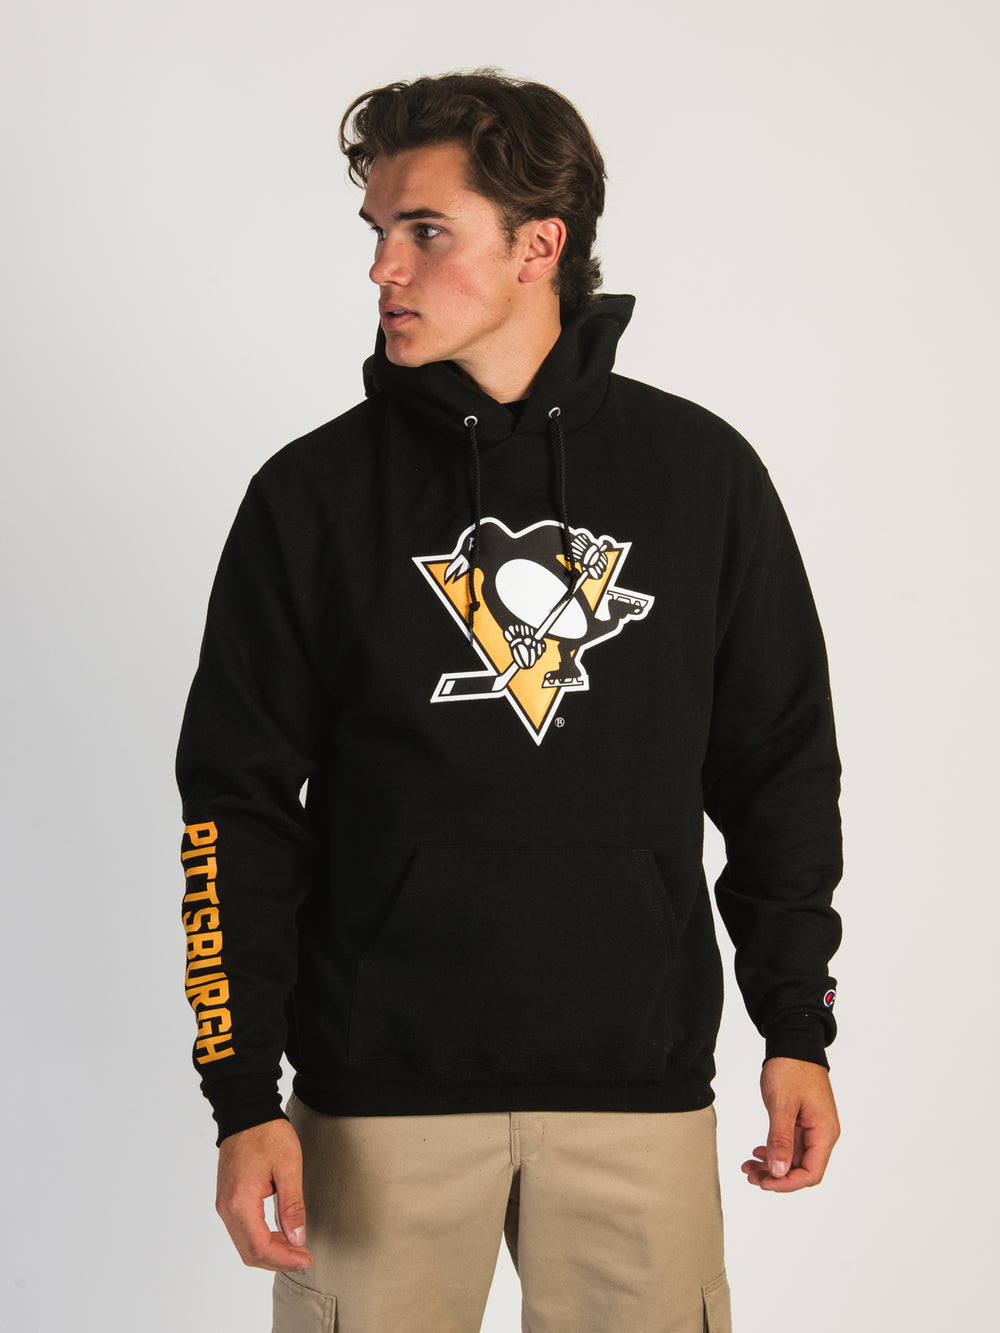 Pittsburgh Penguins Adidas Hockey NHL Black Hoodie Sweatshirt Small Good  Cond